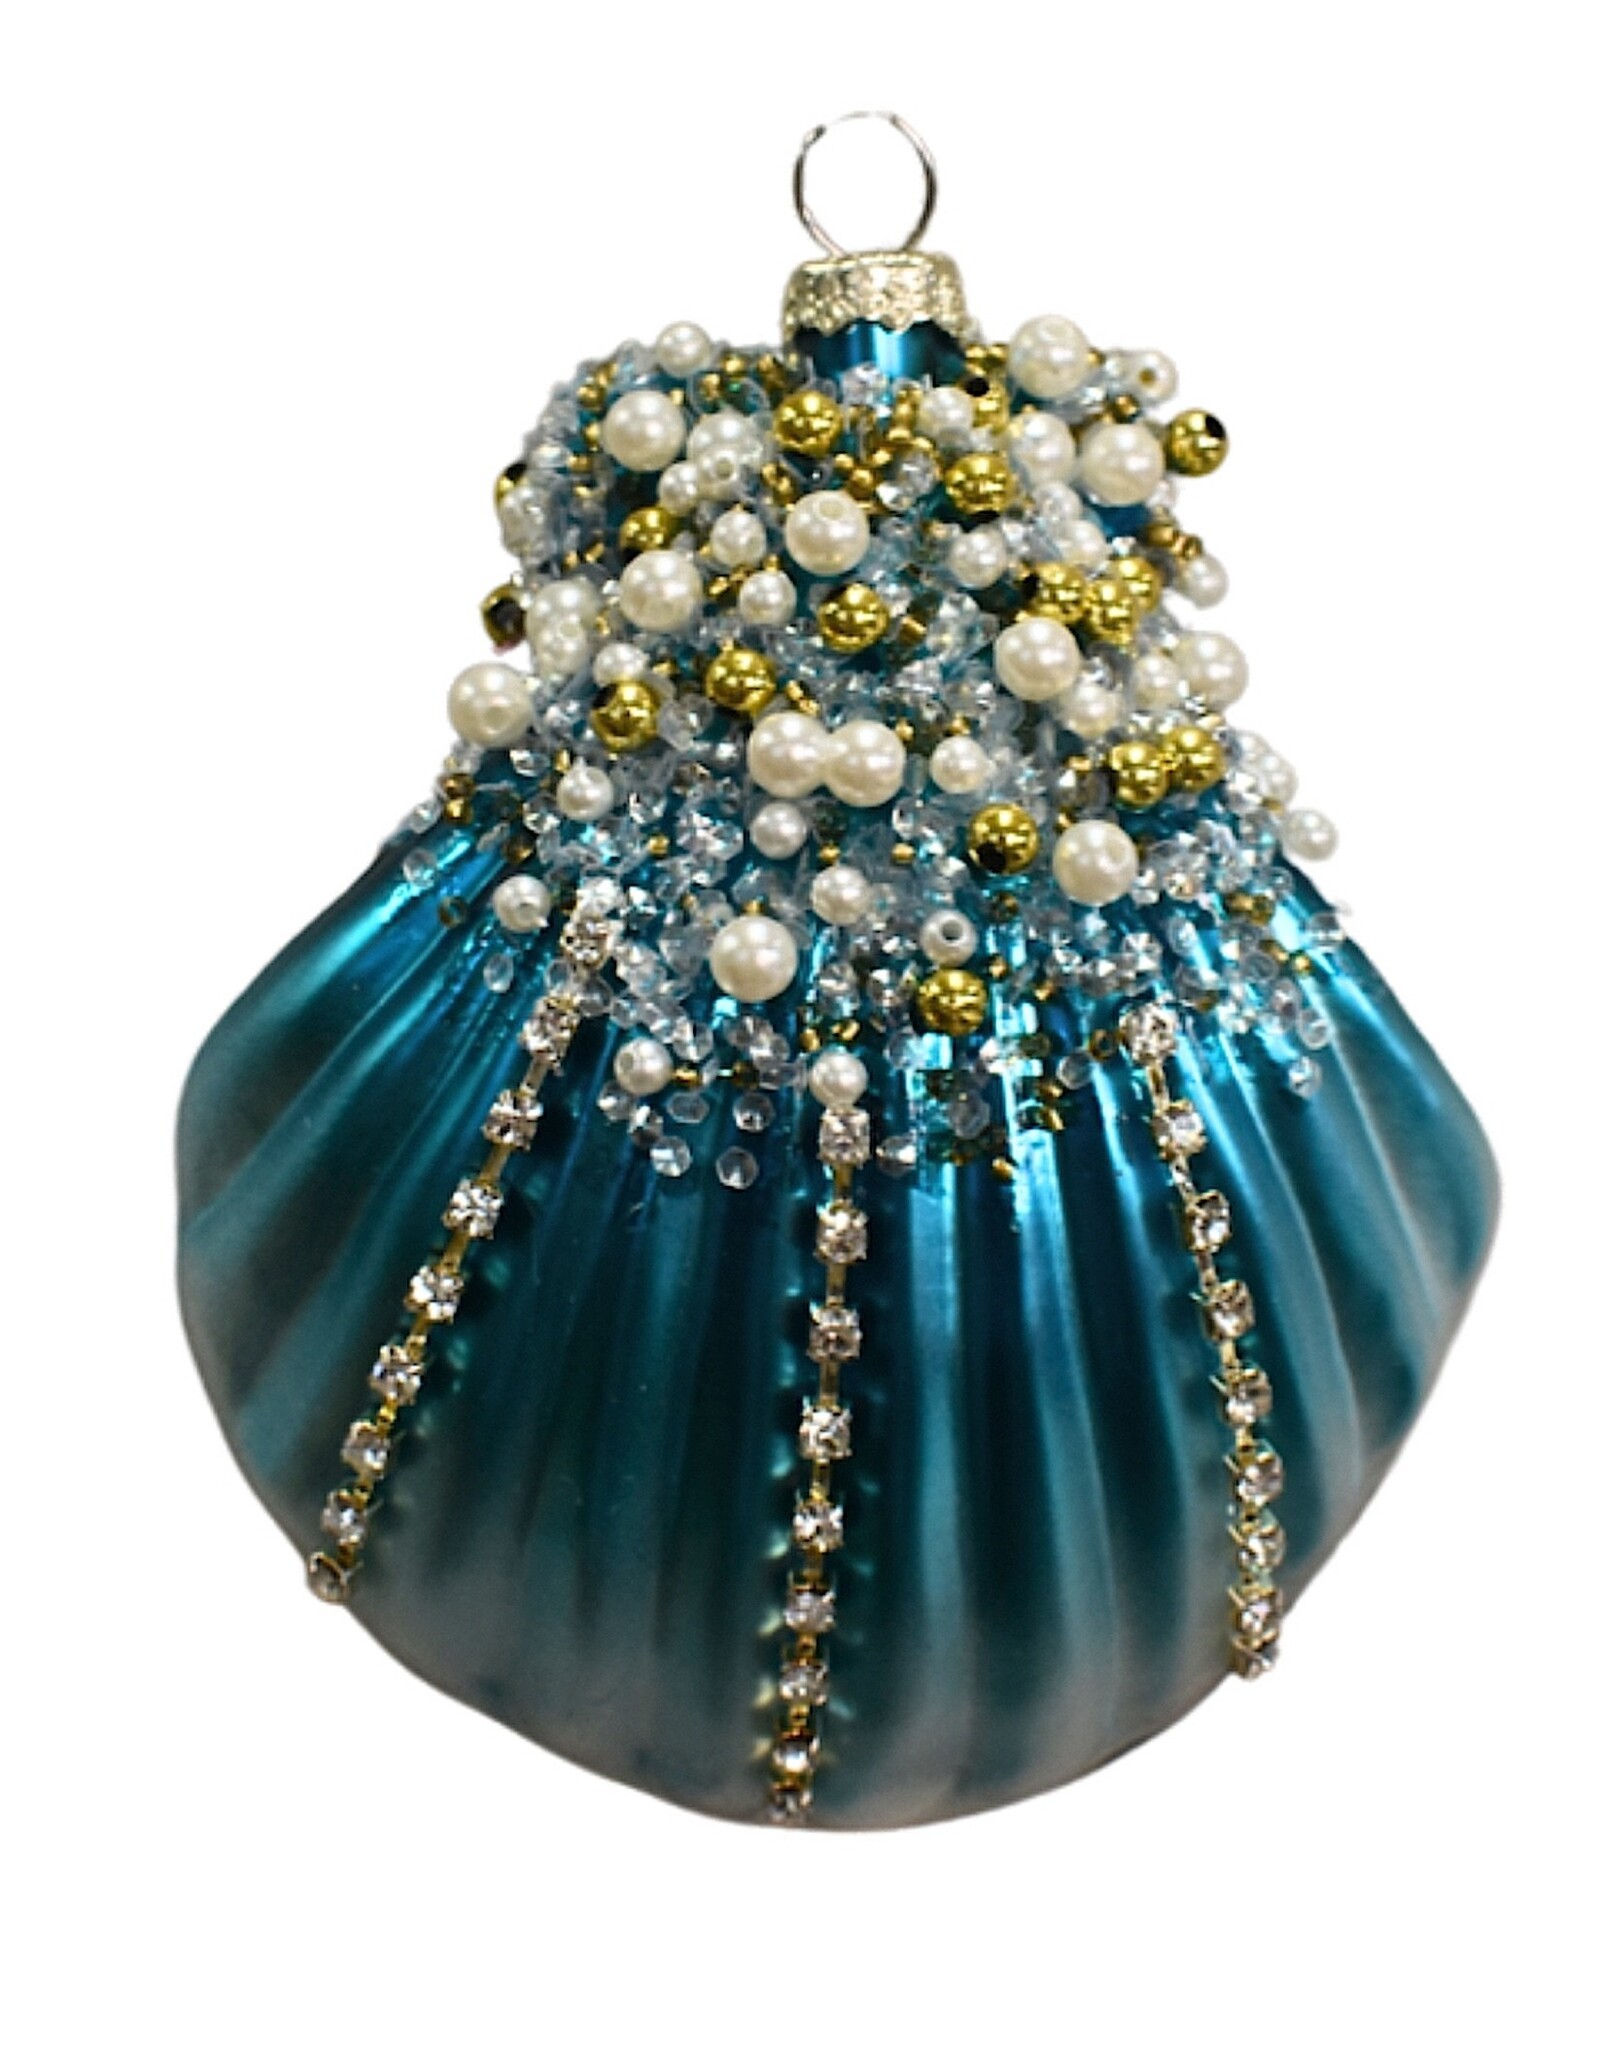 David Christophers Sea Scallop Glass Ornament w Beads Pearls